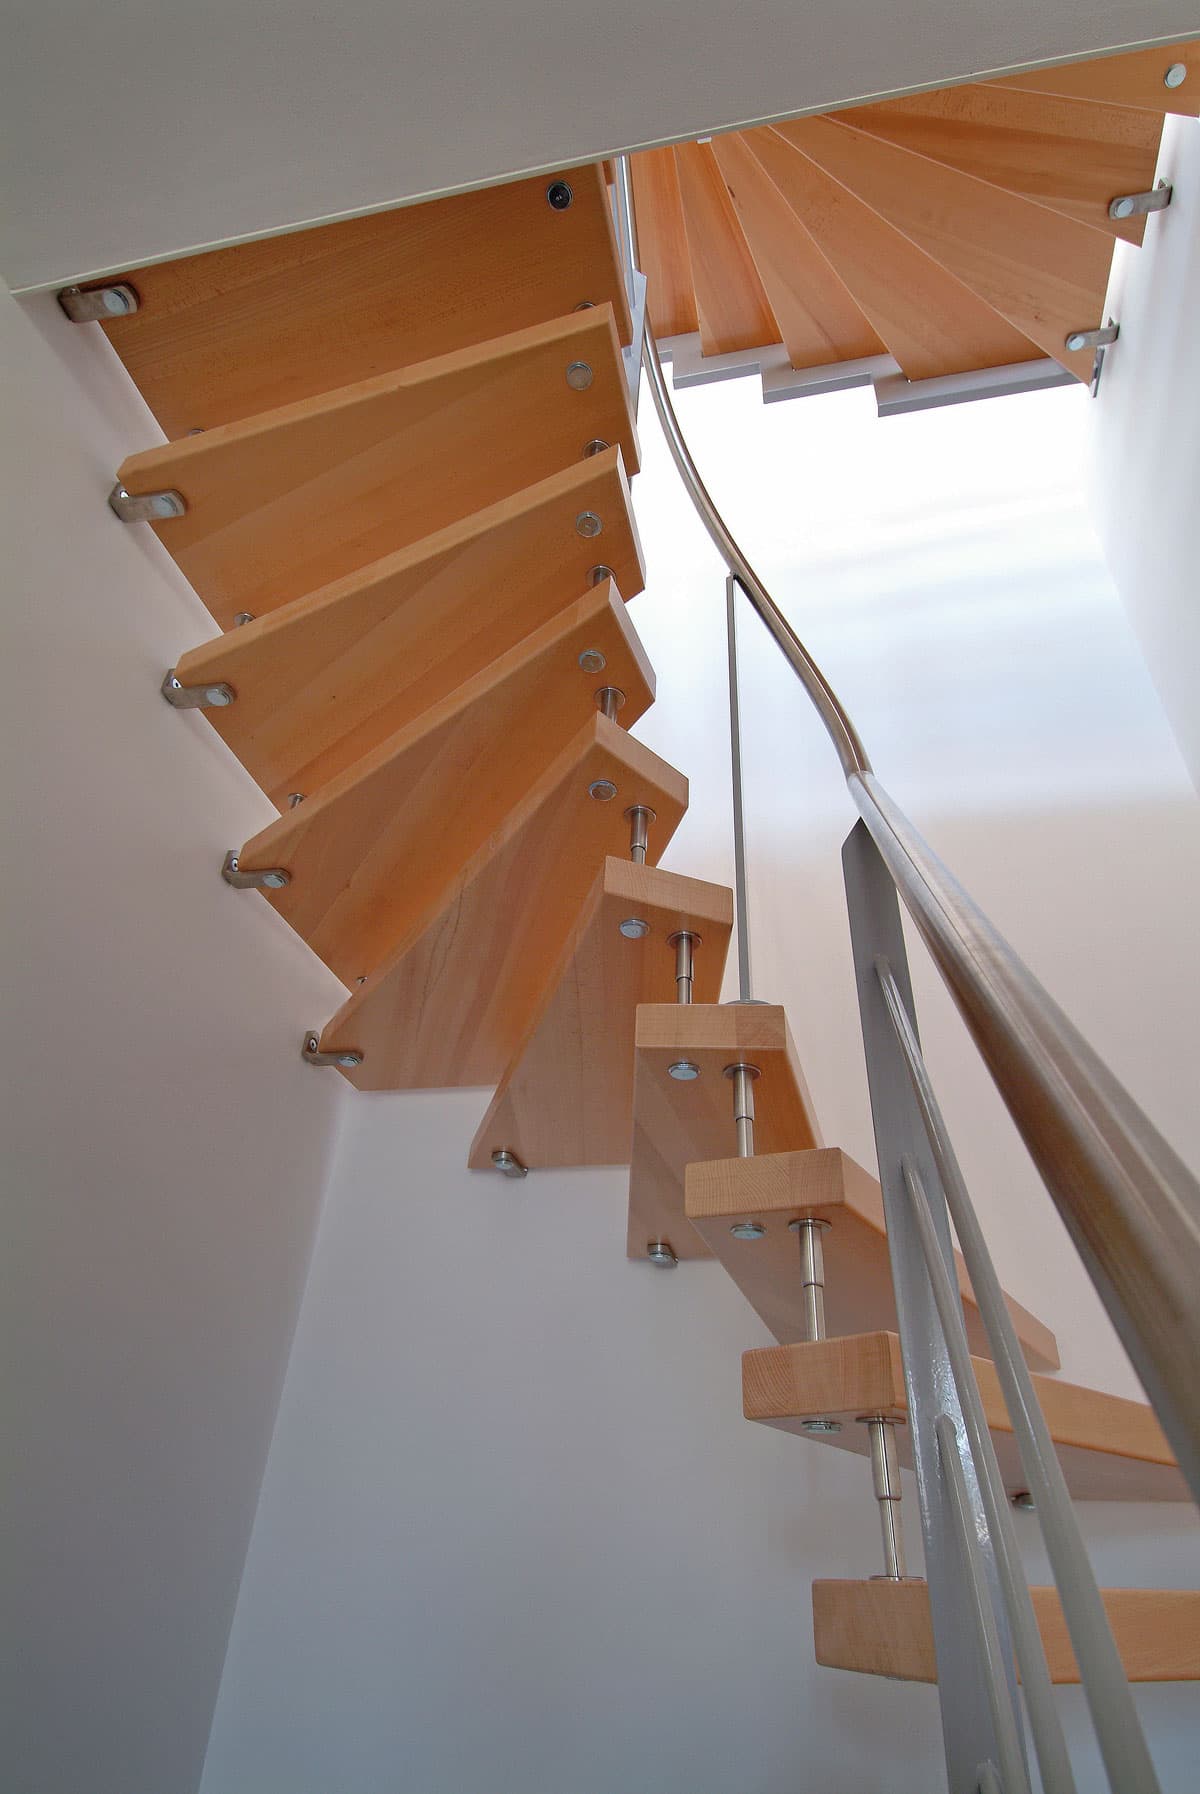 Vrijdragende trap met houten treden in ronde vorm